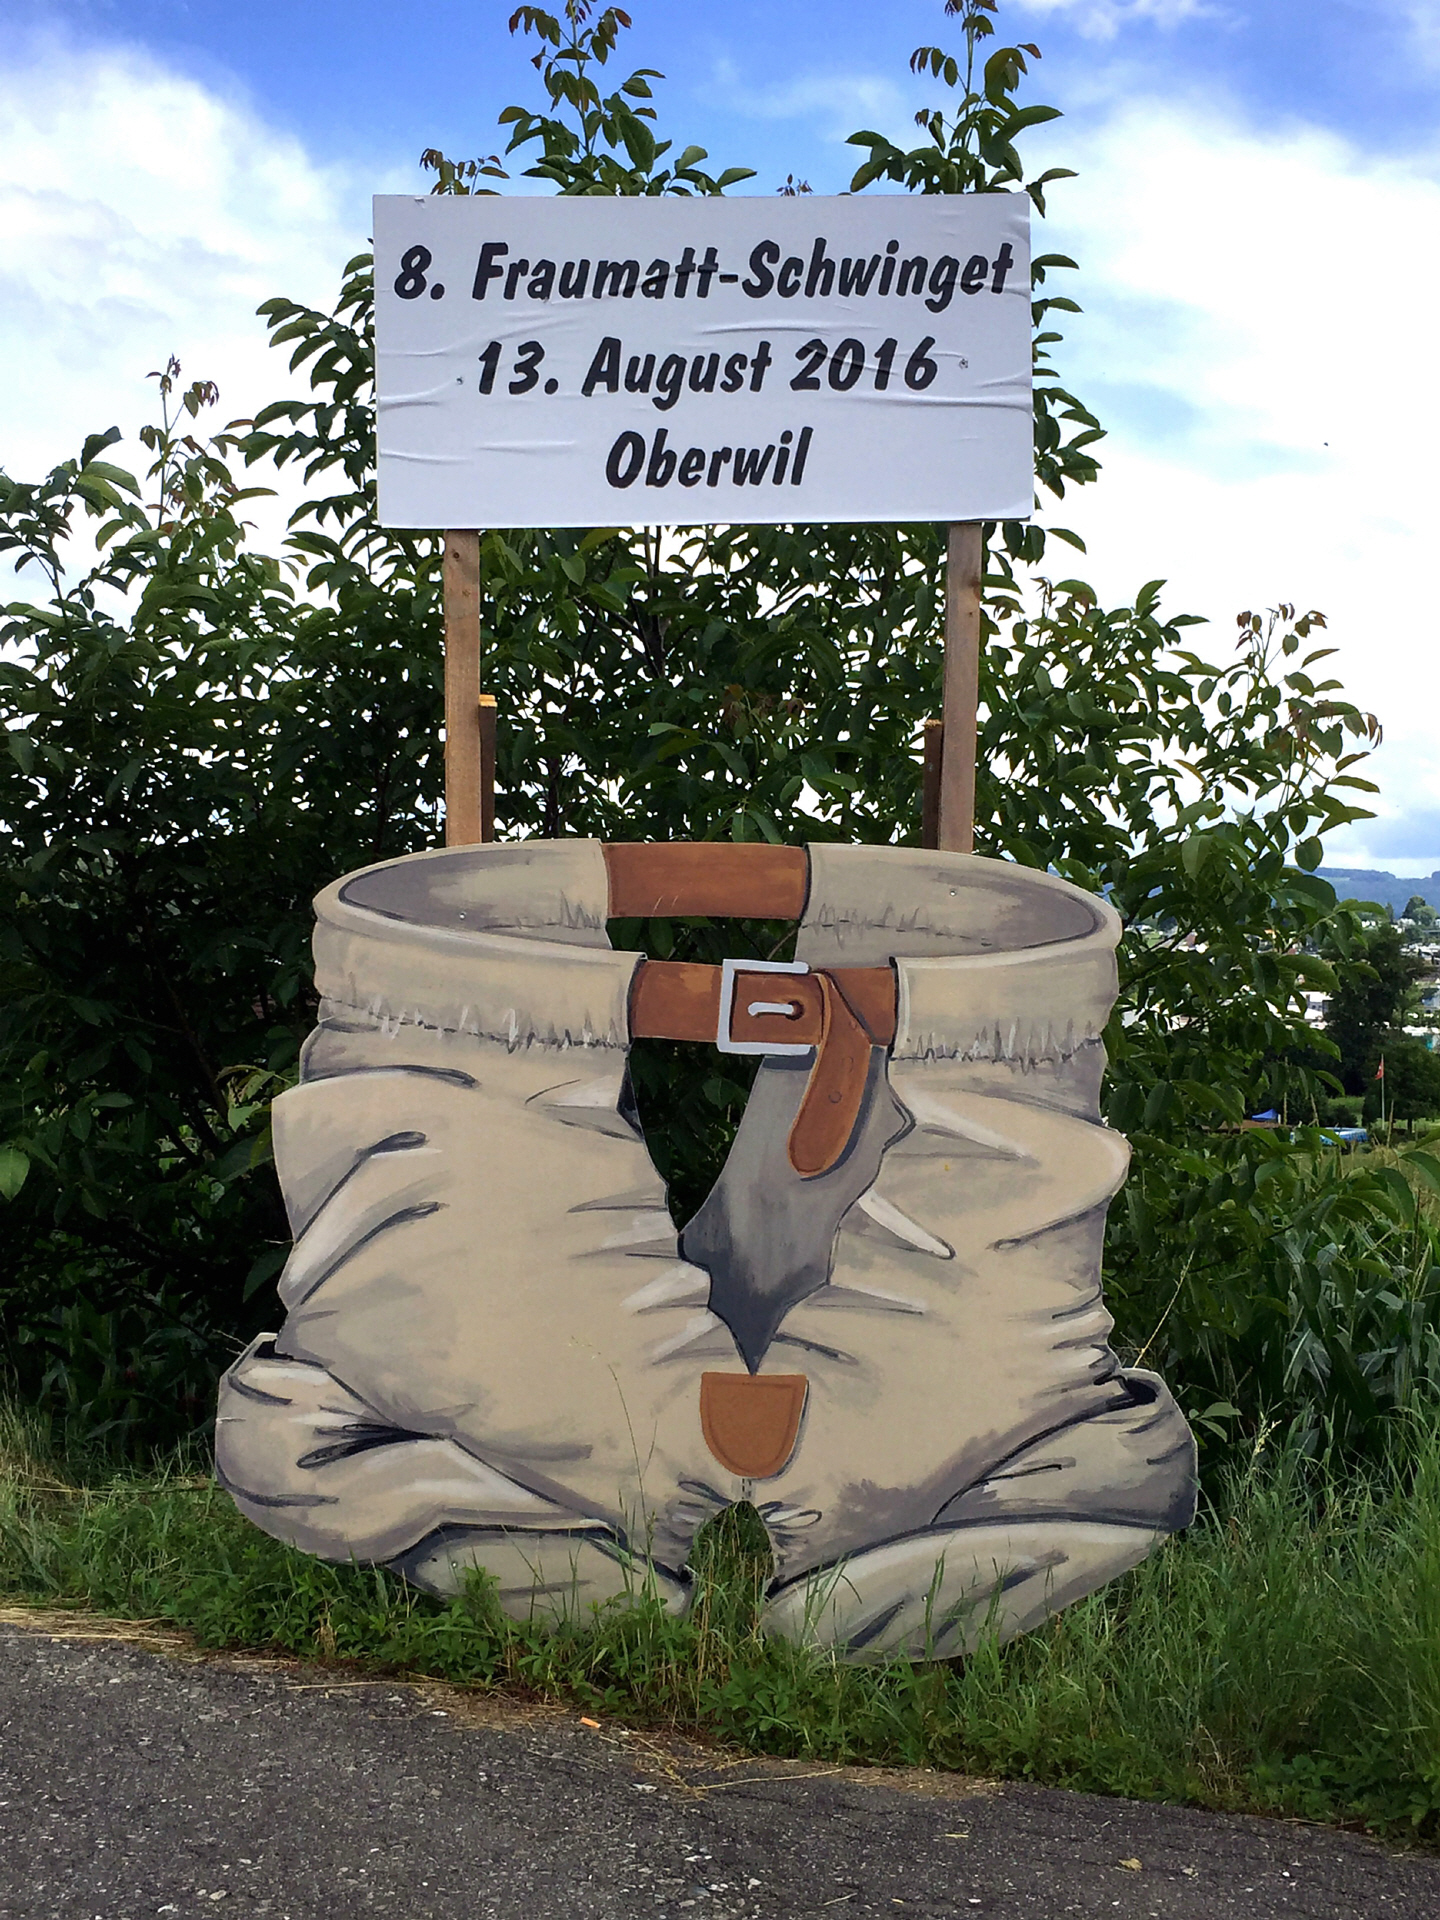 Fraumatt-Schwinget in Oberwil 2016